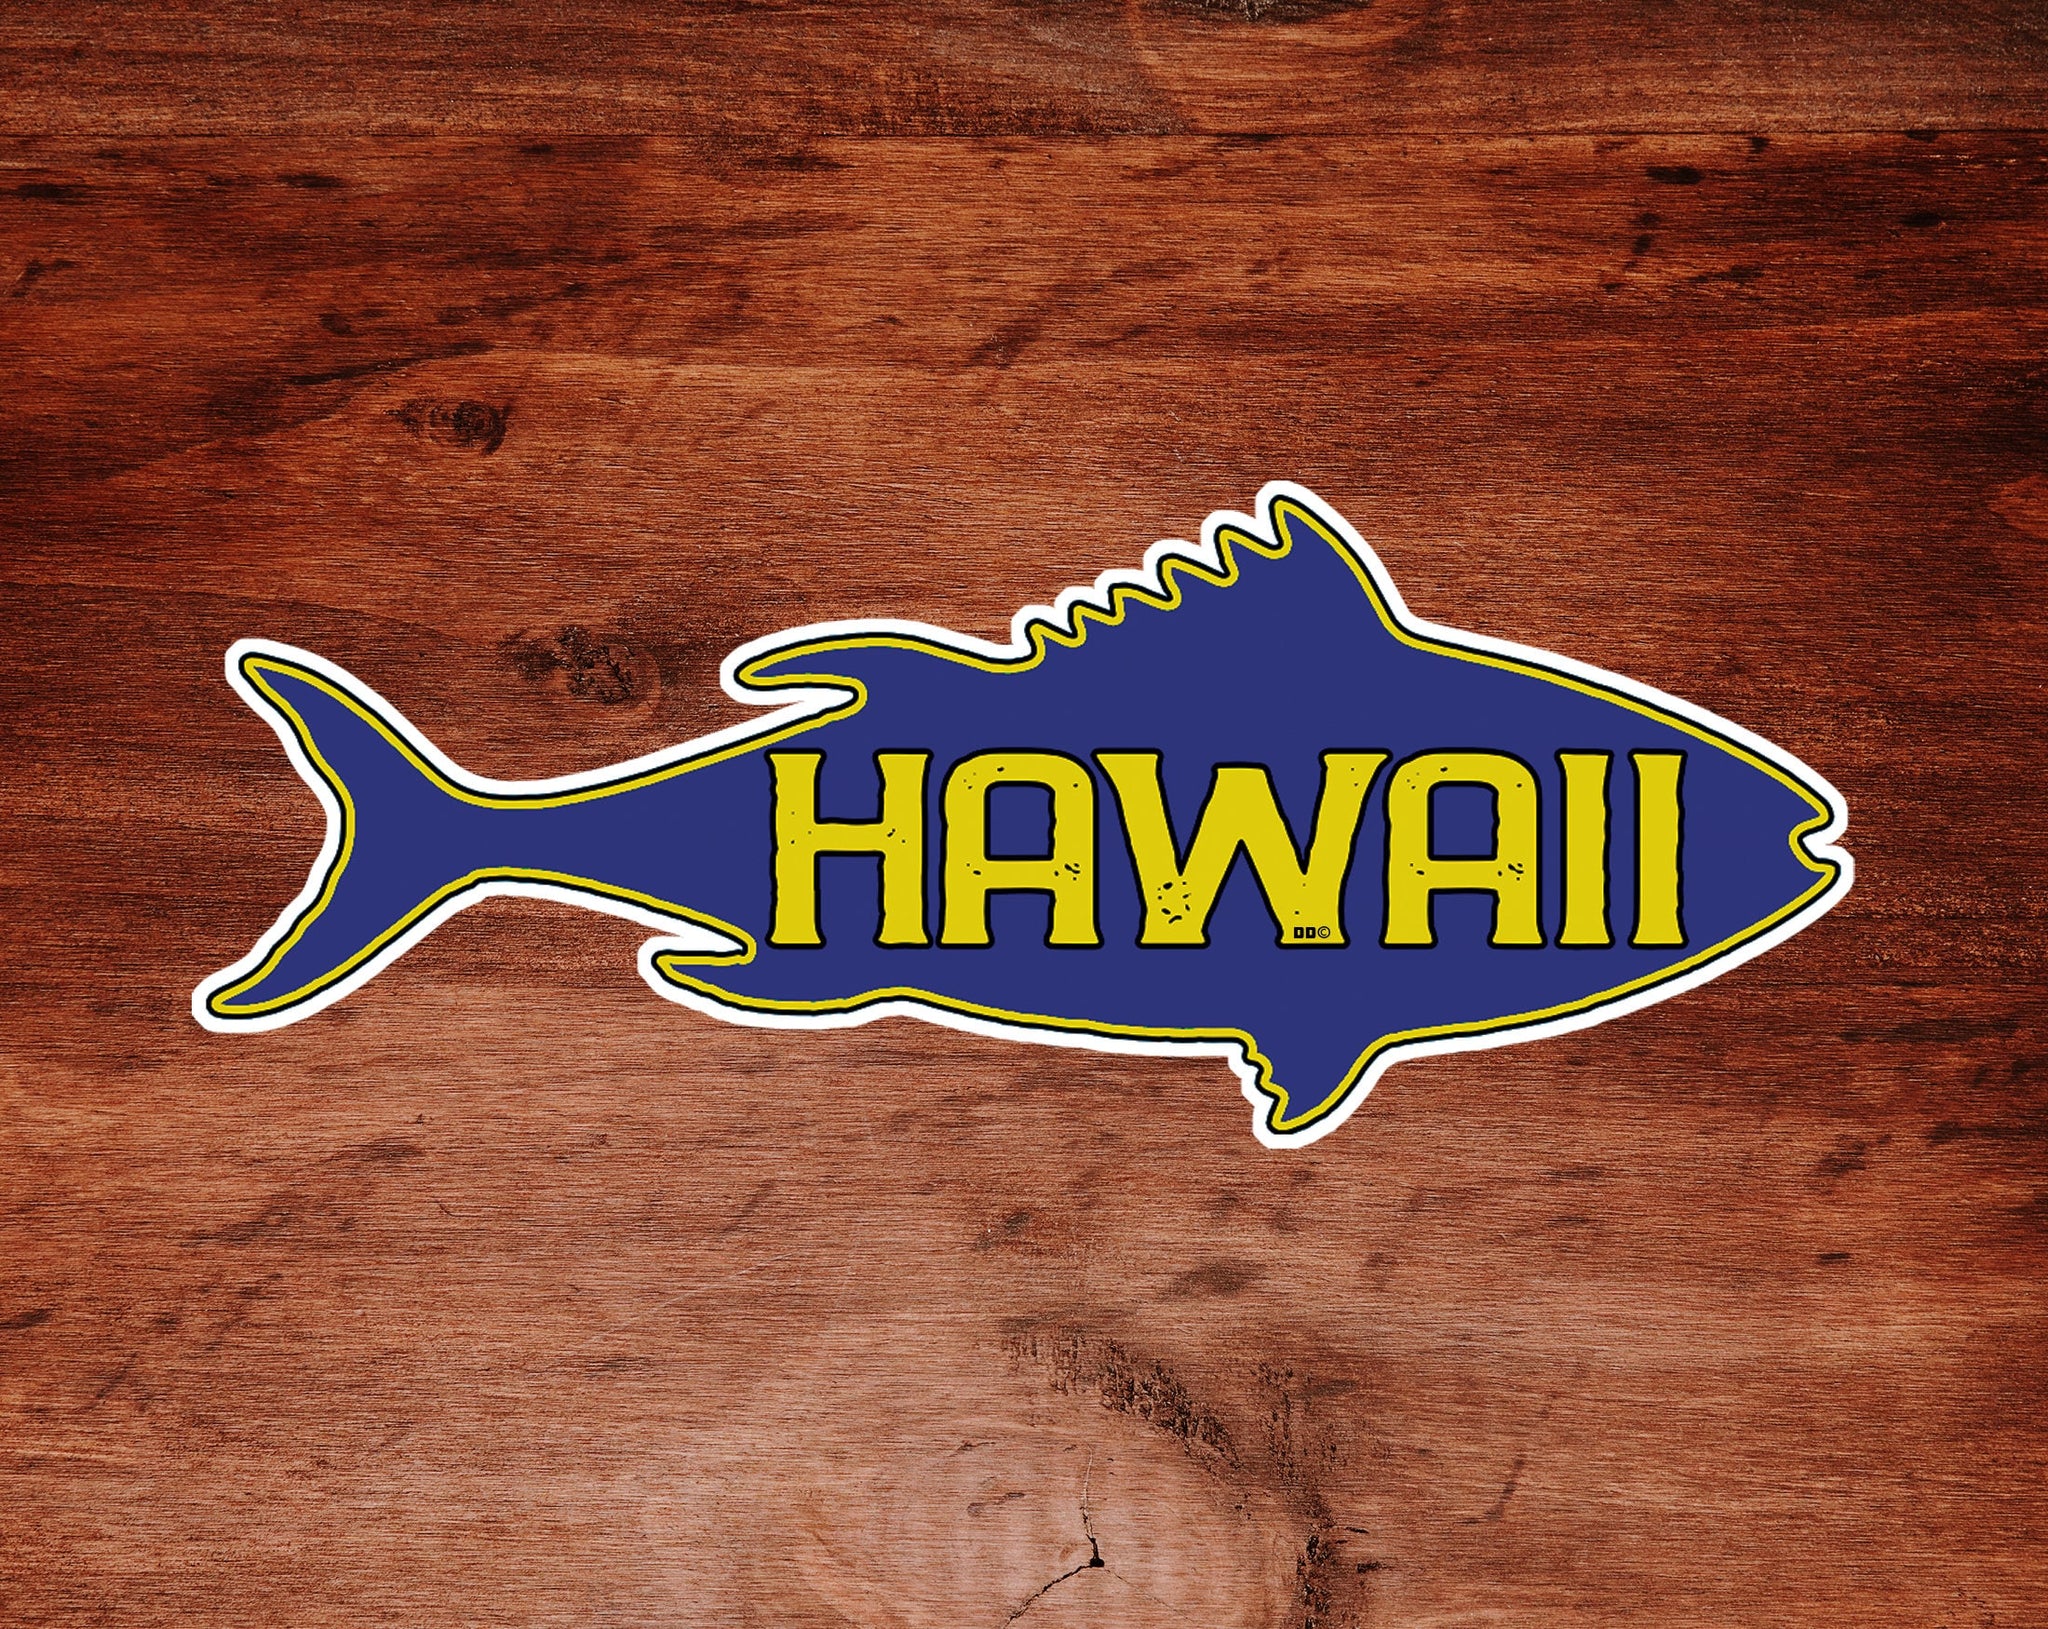 Hawaii Tuna Fishing 4" Sticker Decal Oahu Kauai Maui Lanai Moloka‘i Ahi Vinyl